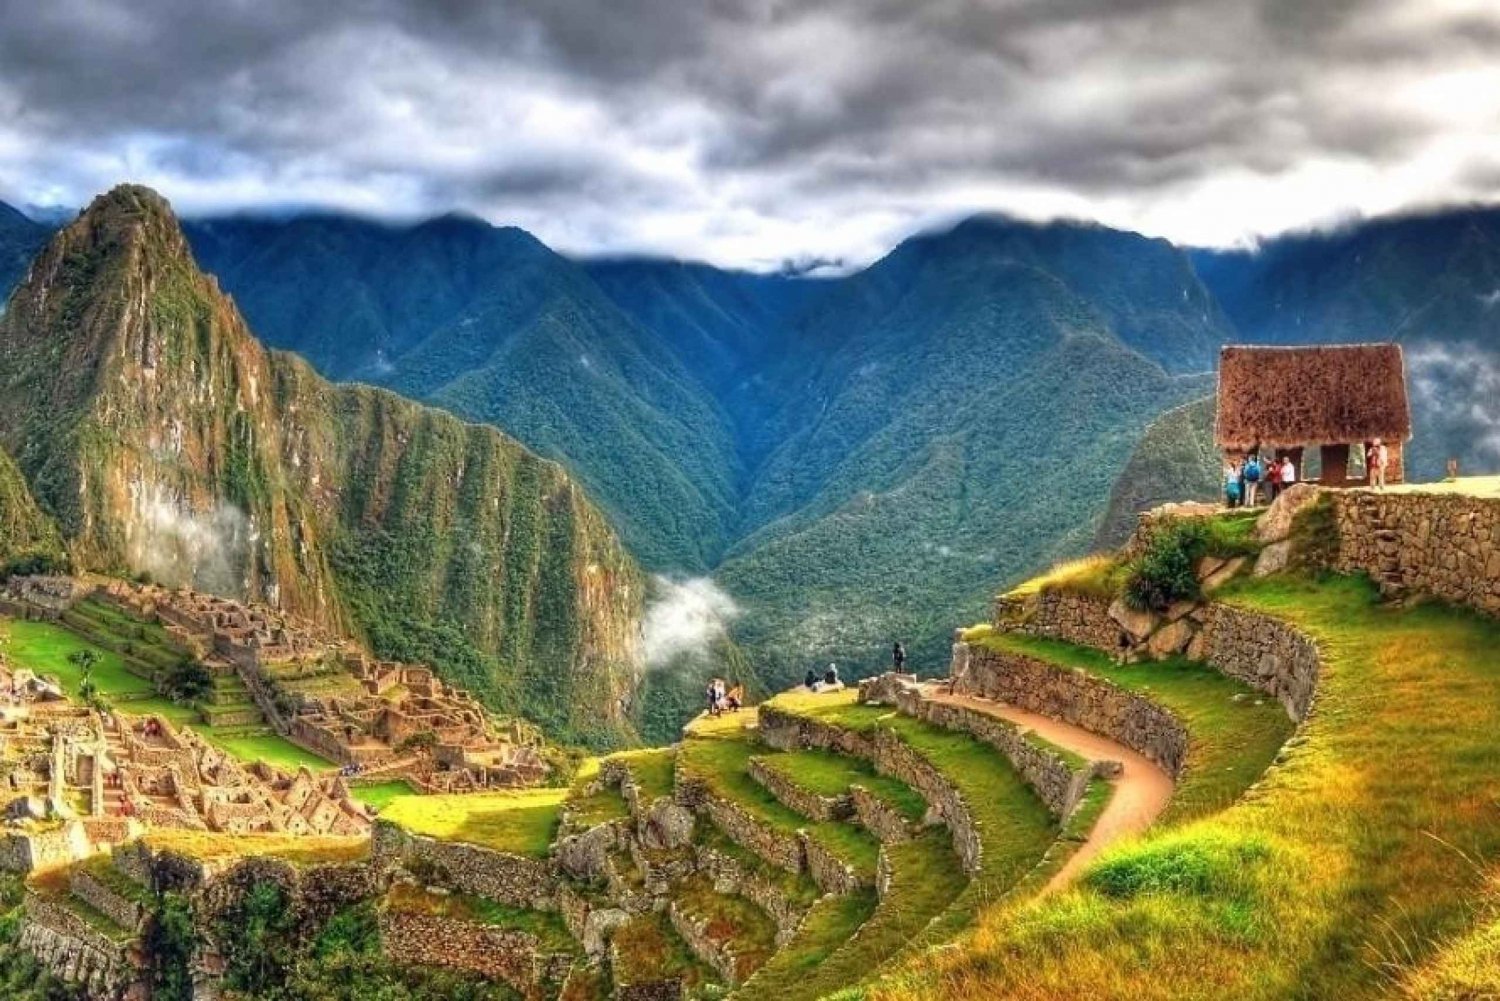 Tour Valle Sagrado y Machu Picchu + Hotel, Tren y Ticket